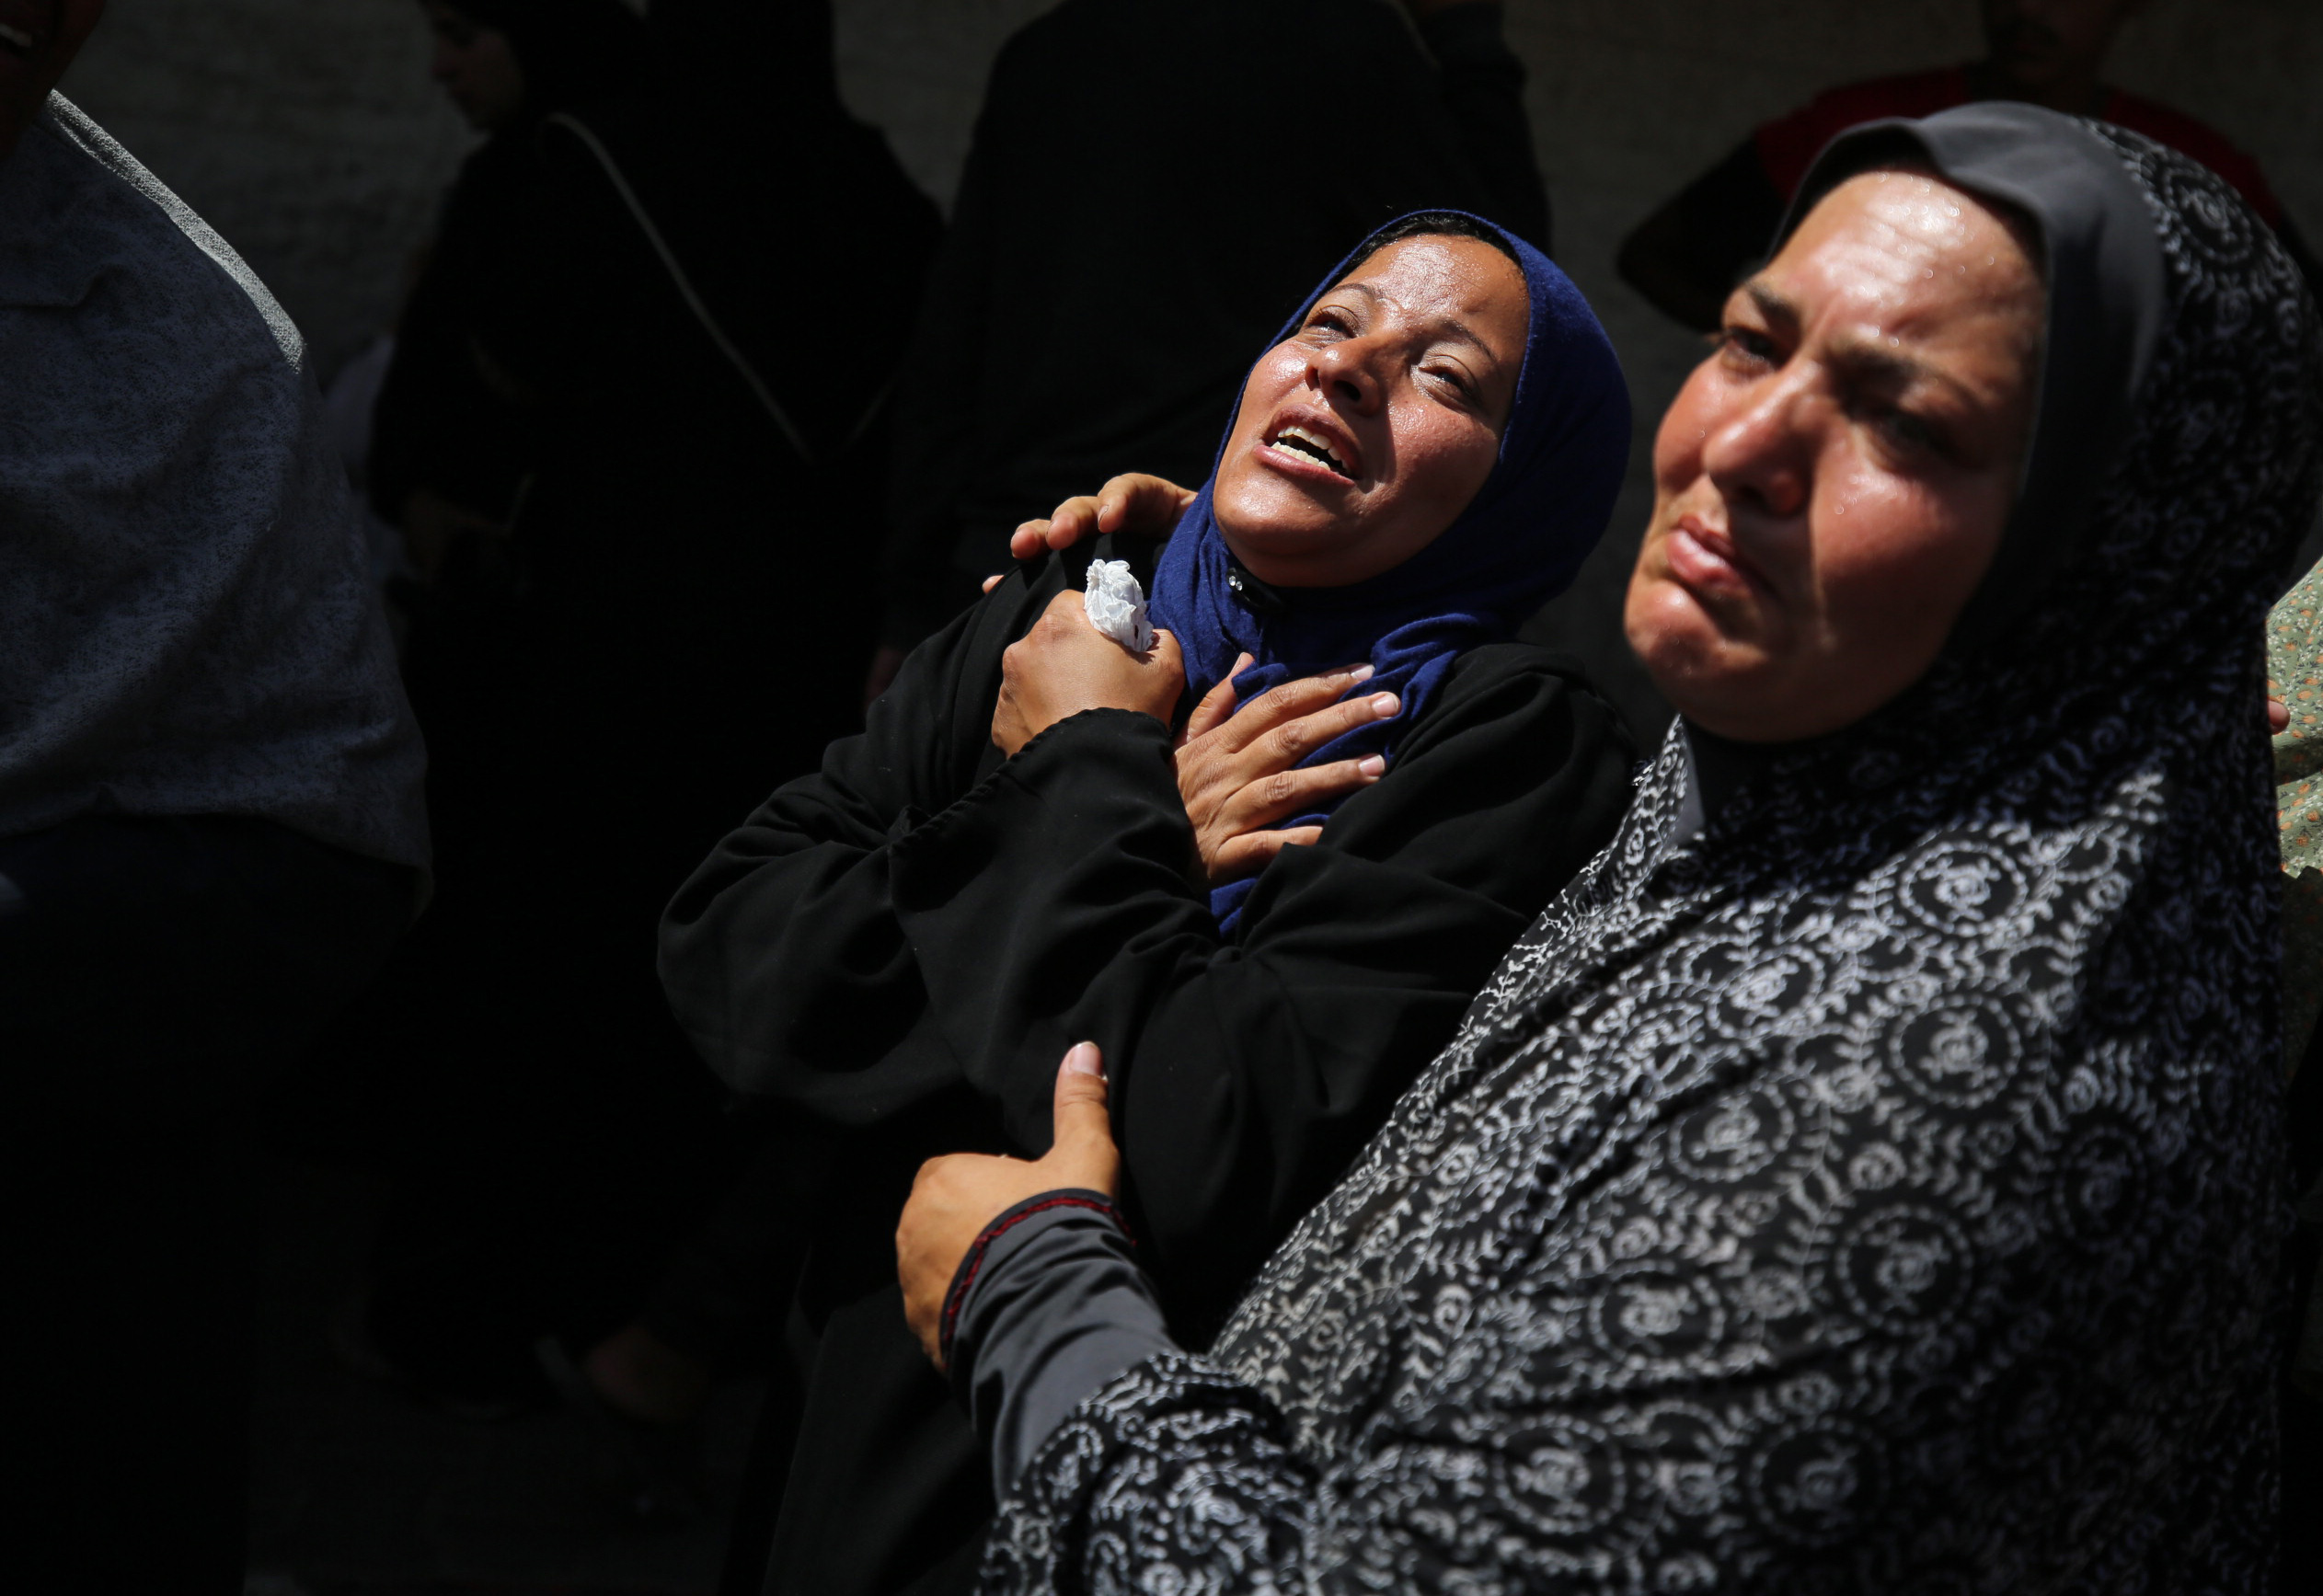 Palestinian women mourn the deaths of loved ones in Deir al-Balah, Gaza, on June 8. 